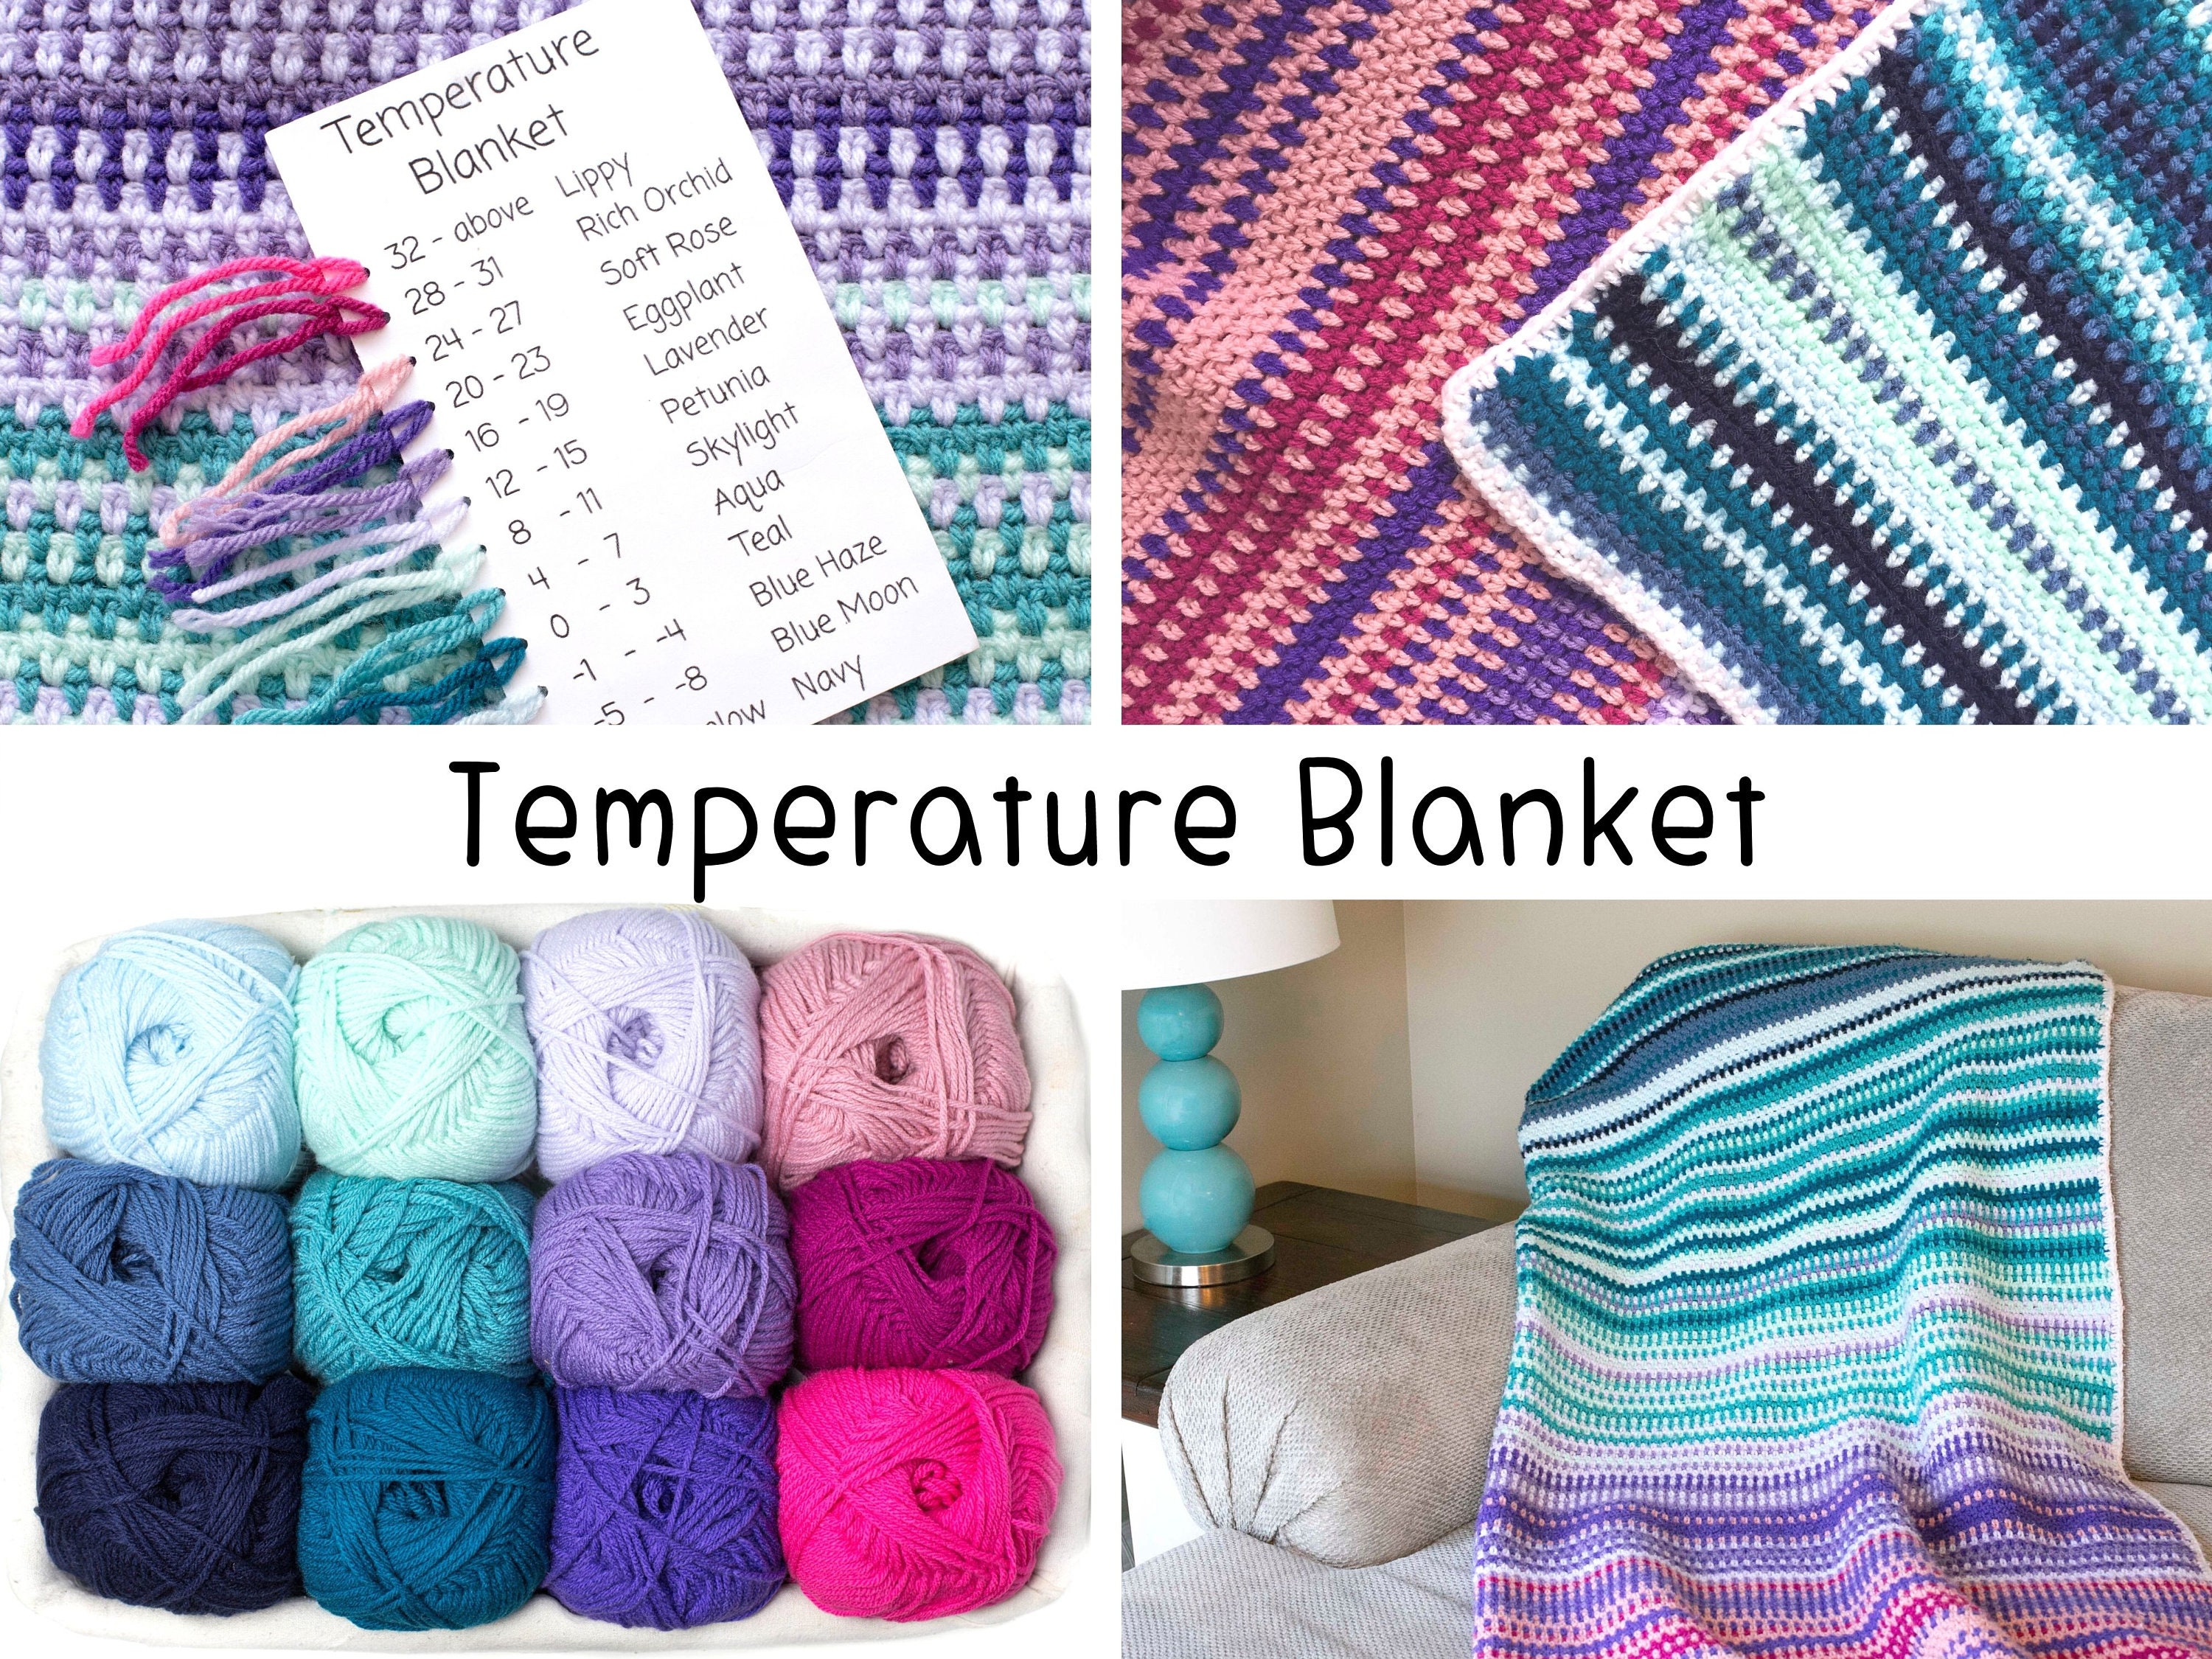 TEMPERATURE BLANKET Crochet Pattern Historical Color Chart